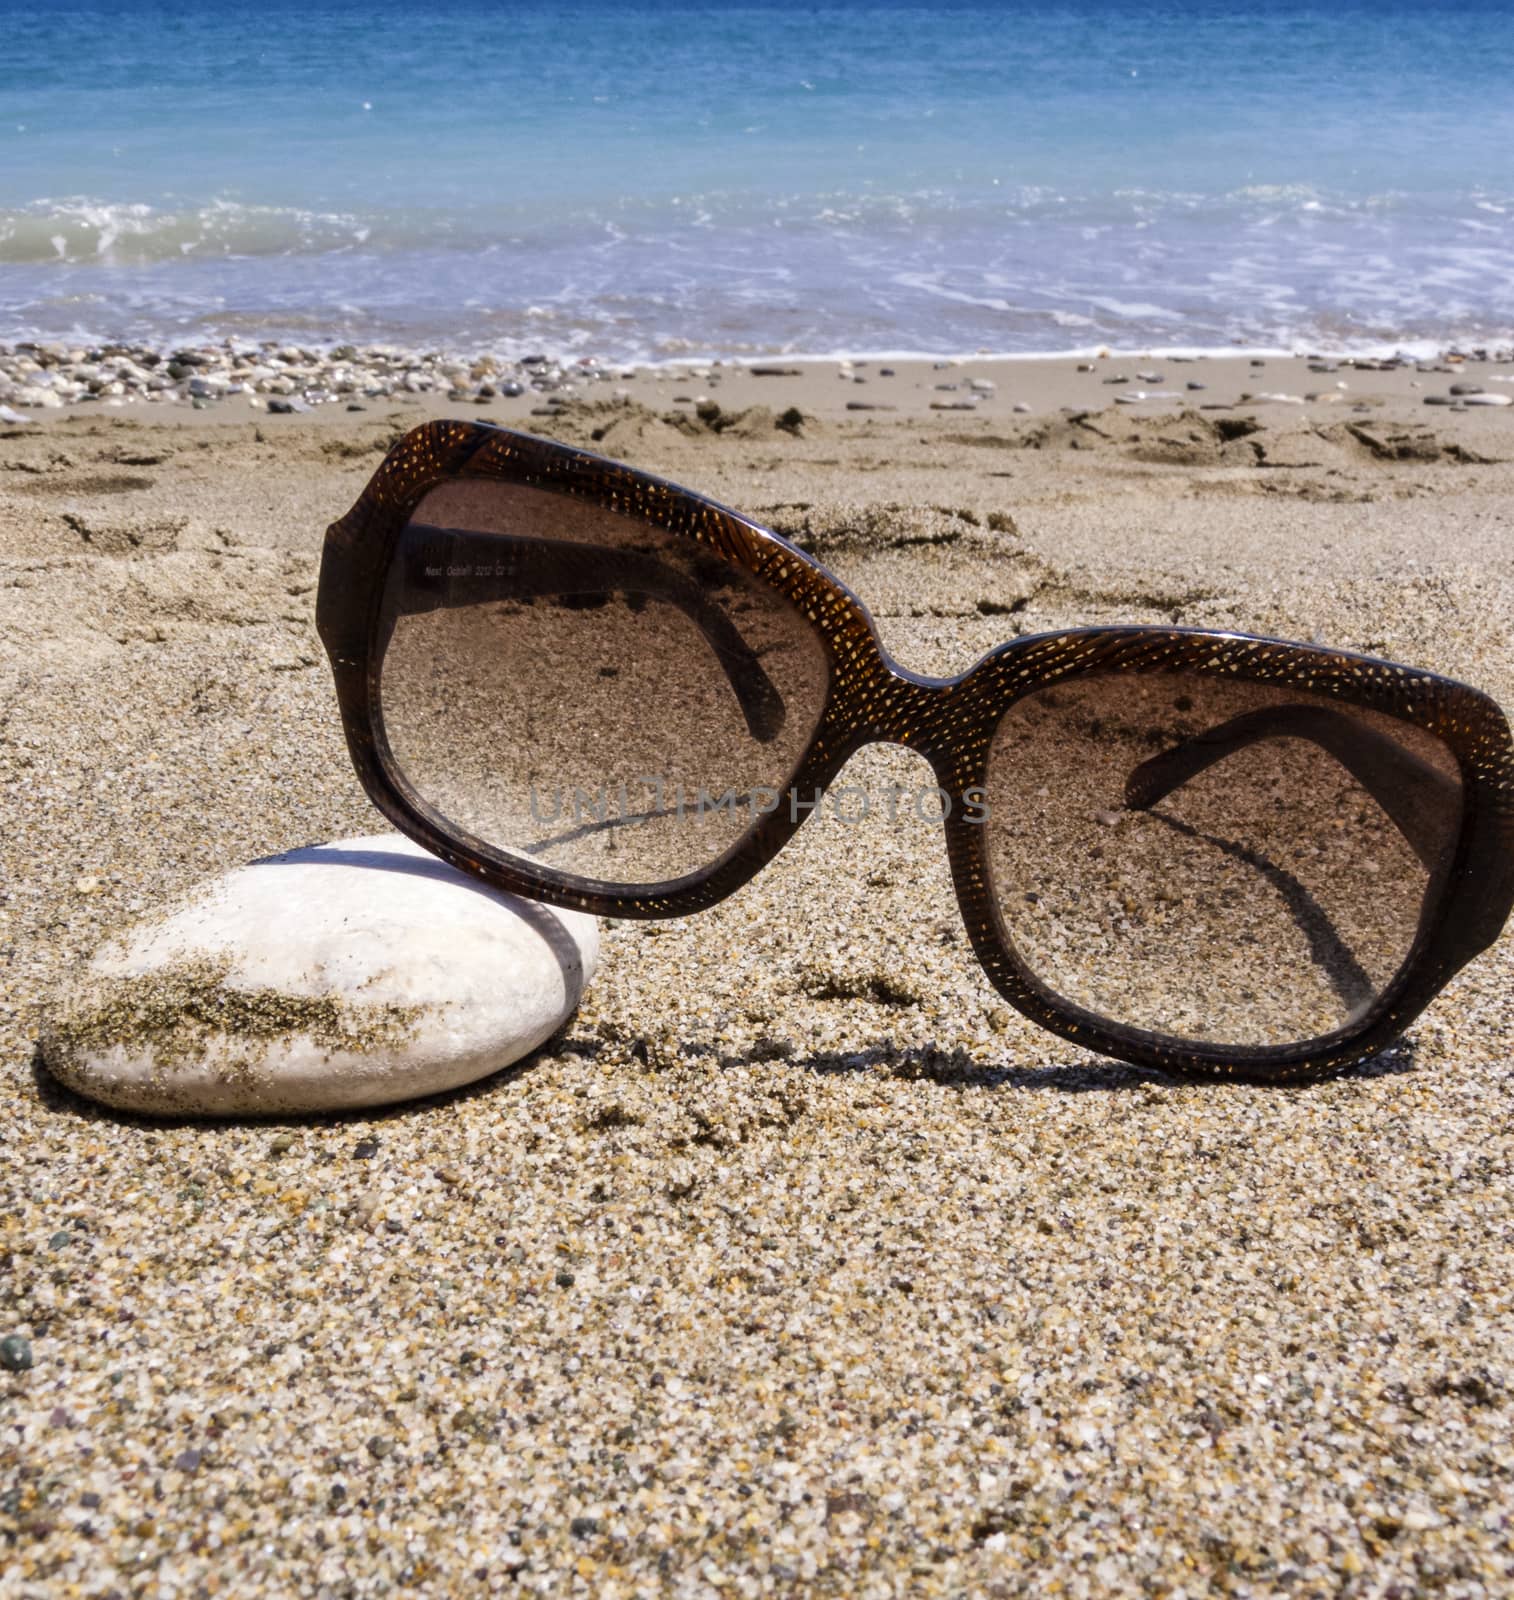 Sunglasses lying on rocky beach by ankarb